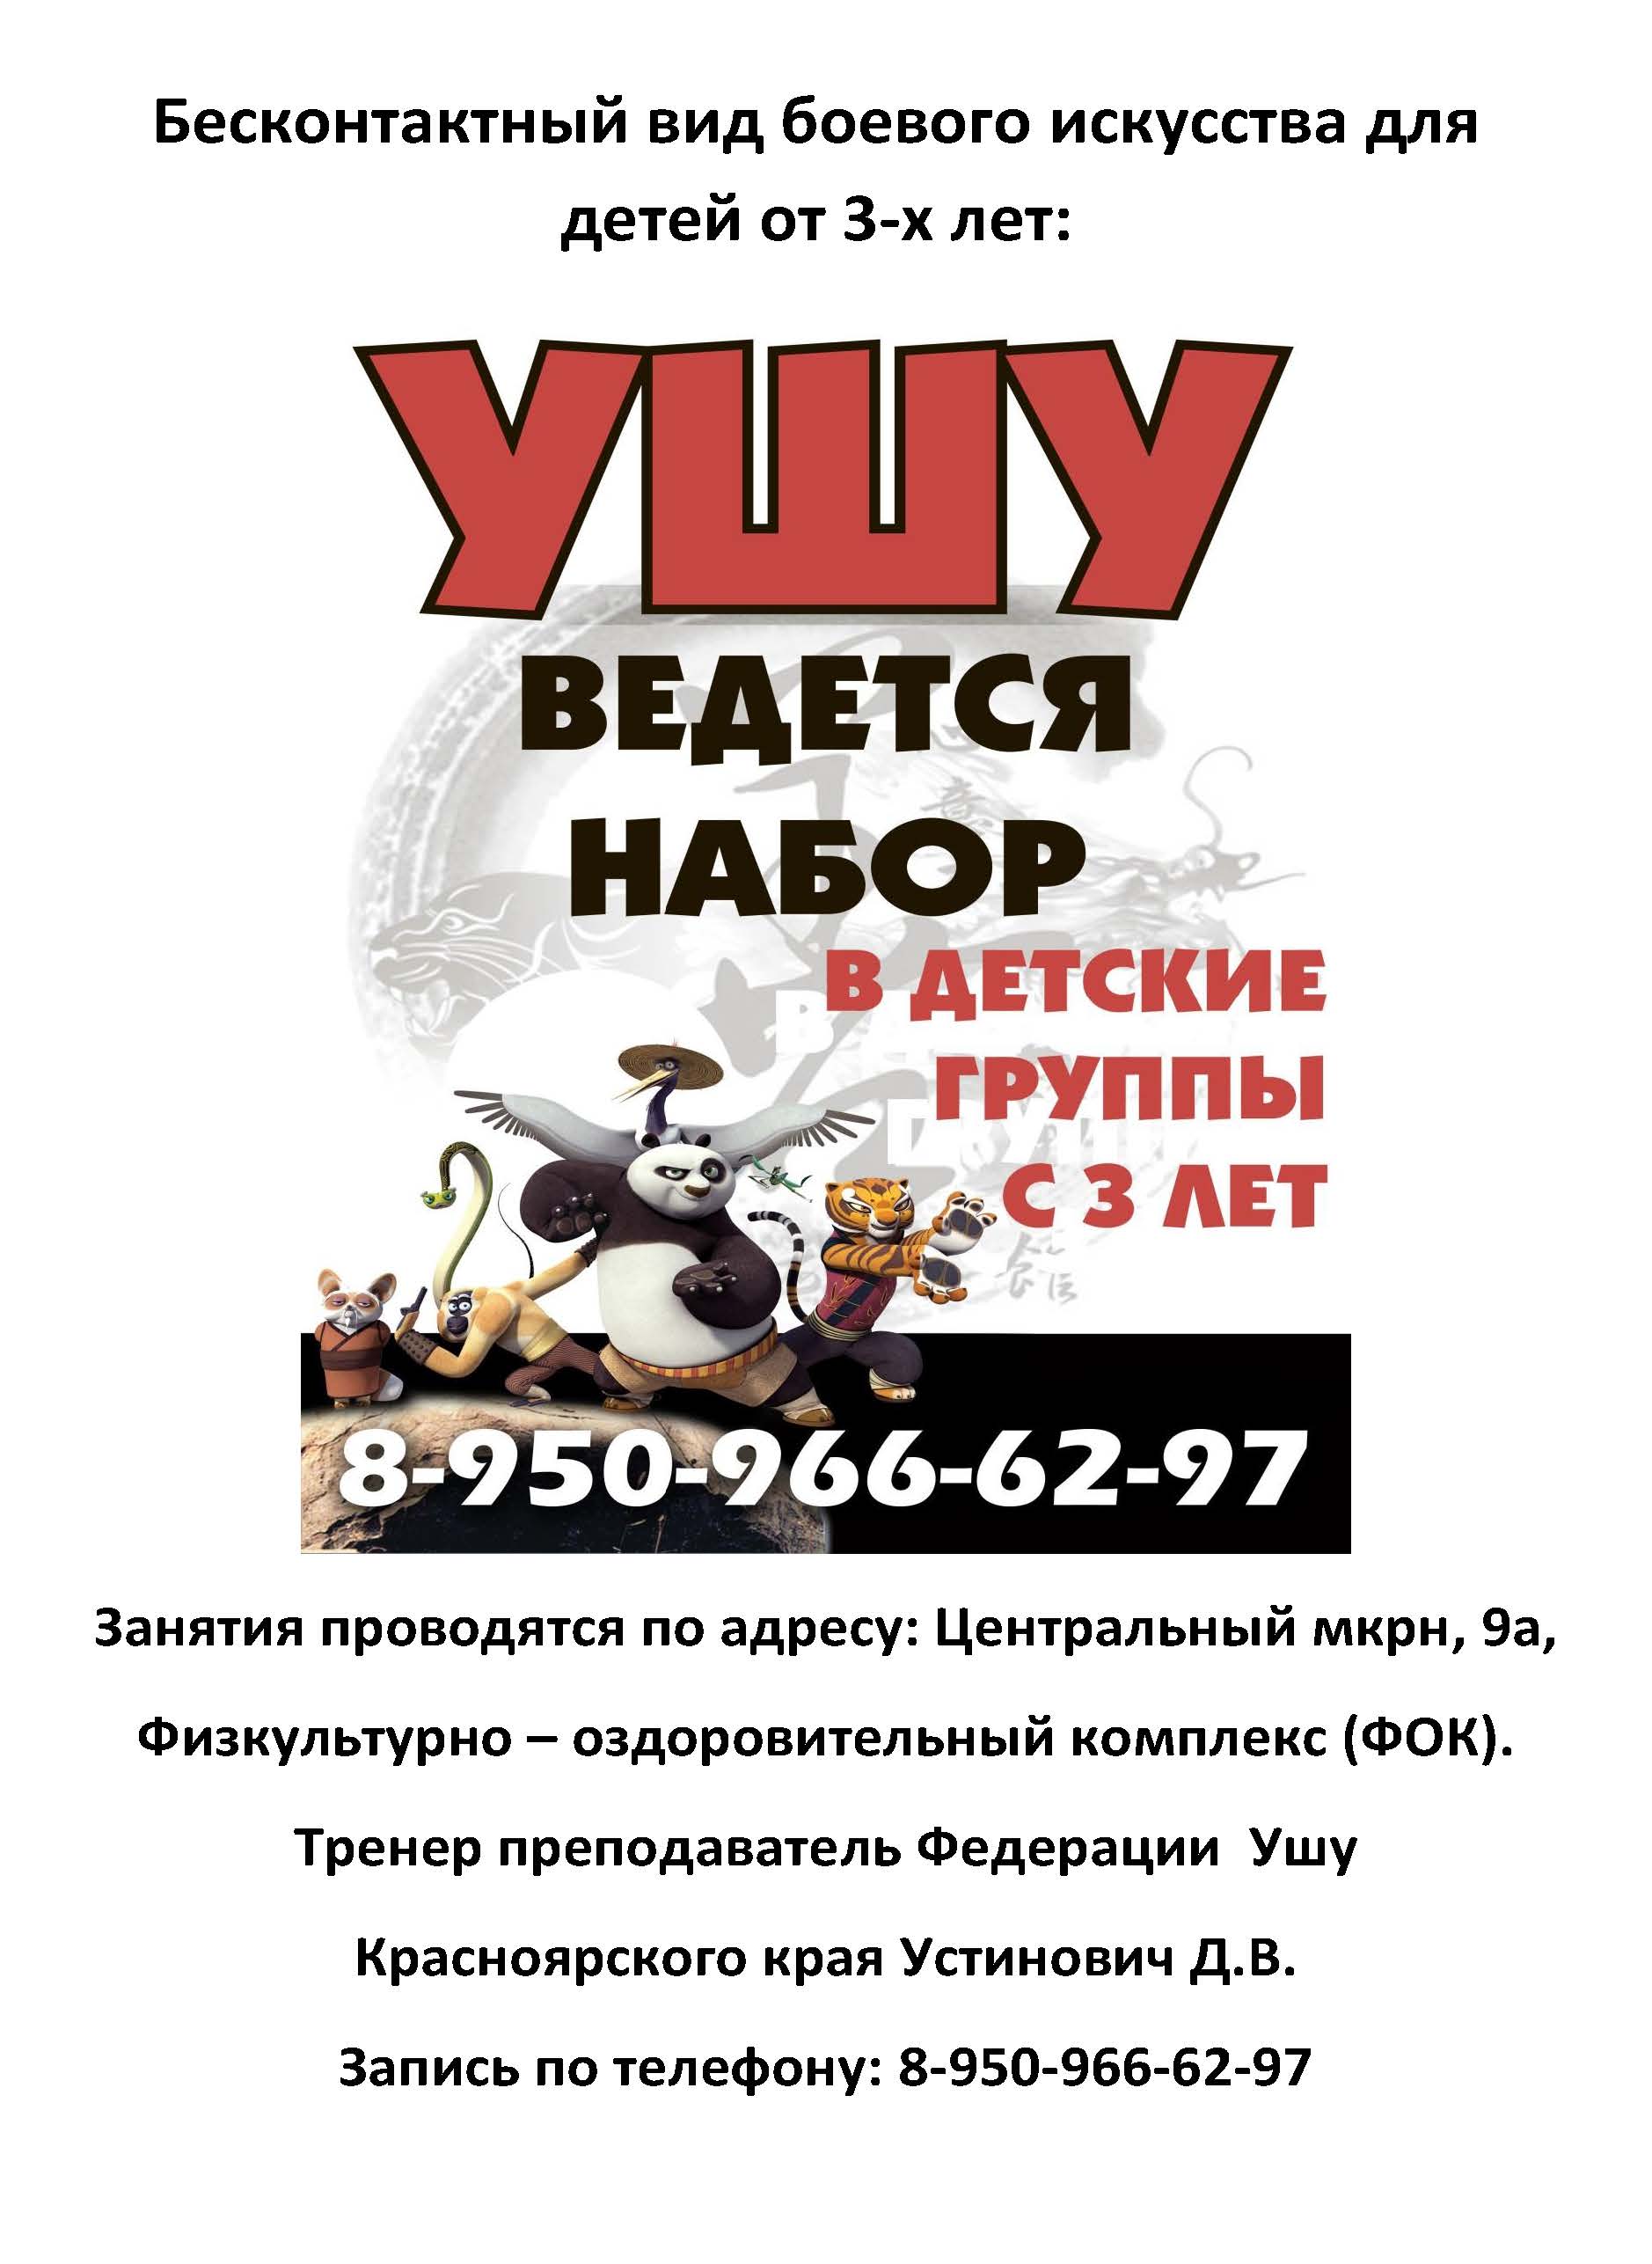 Саяногорск Инфо - reklama-dlya-sadikov.jpg, Скачано: 443